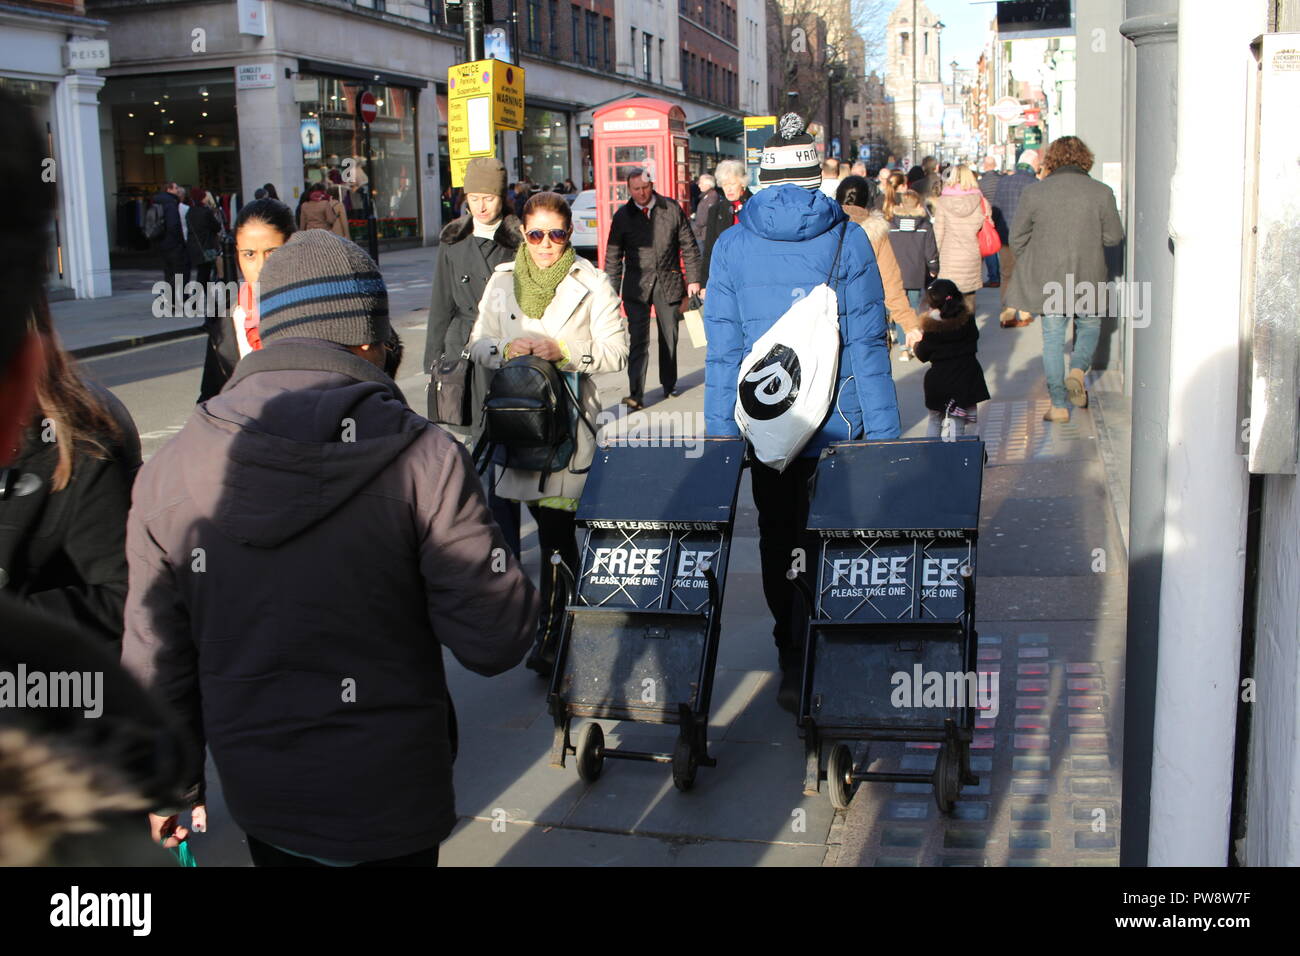 LONDON, UK - February 16, 2018: Newspaper boy dragging newspapers racks on the street. Stock Photo